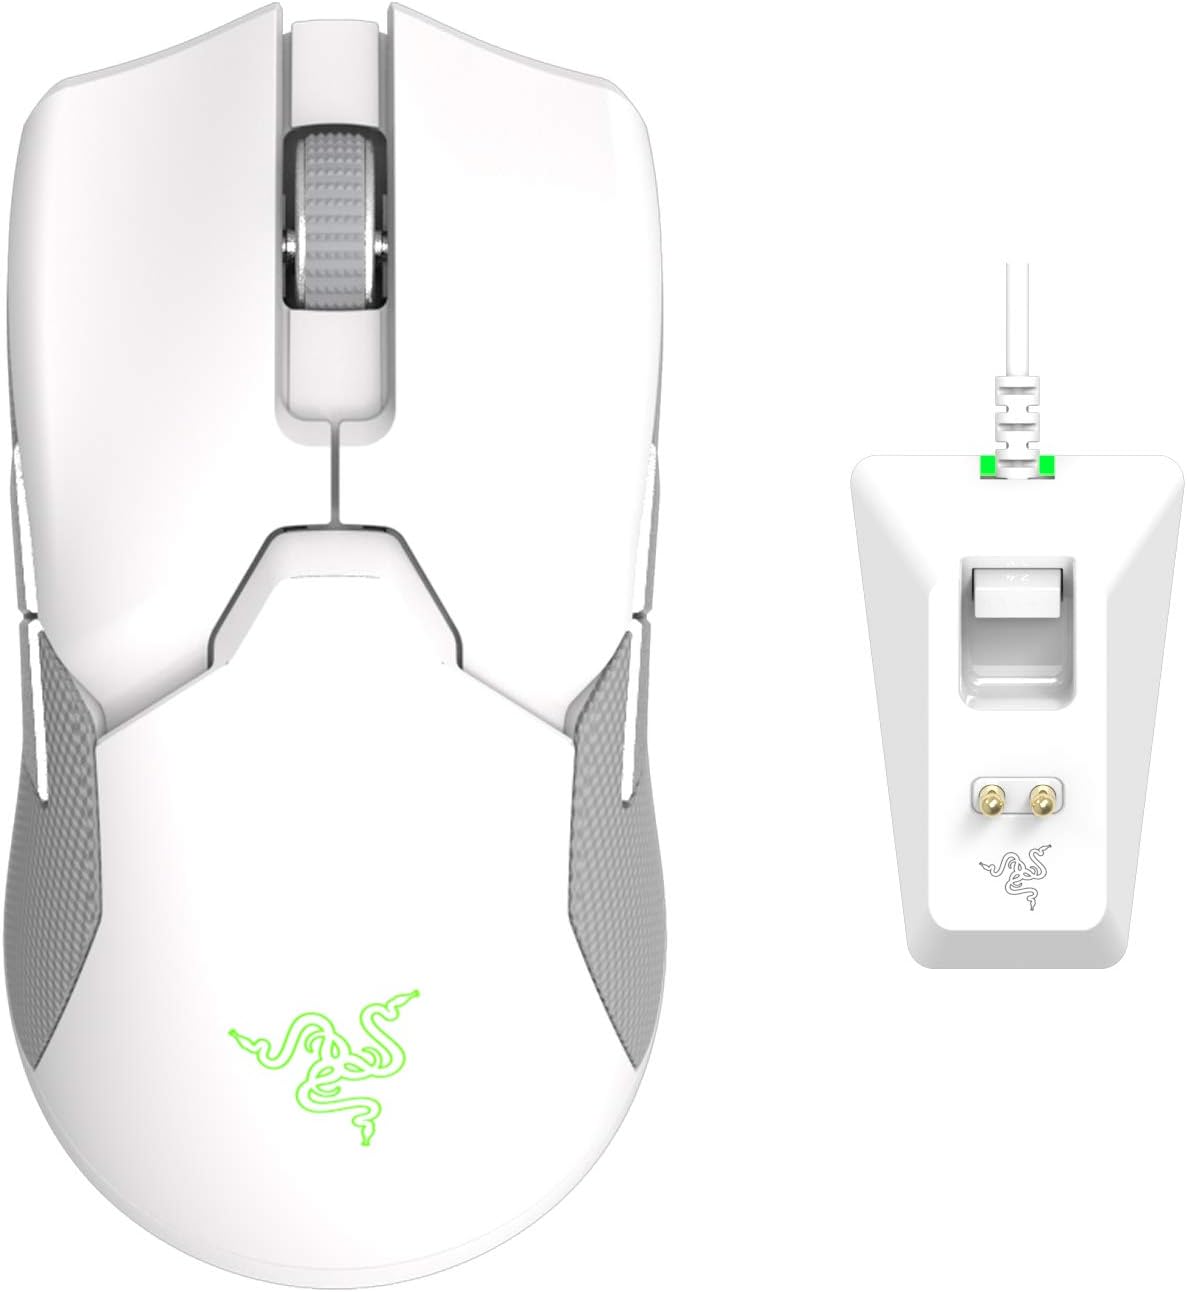 Amazon.com: Razer Viper Ultimate Lightweight Wireless Gaming Mouse & RGB Charging Dock: Hyperspeed Wireless Technology - 20K DPI Optical Sensor - 74g Lightweight - White $84.99